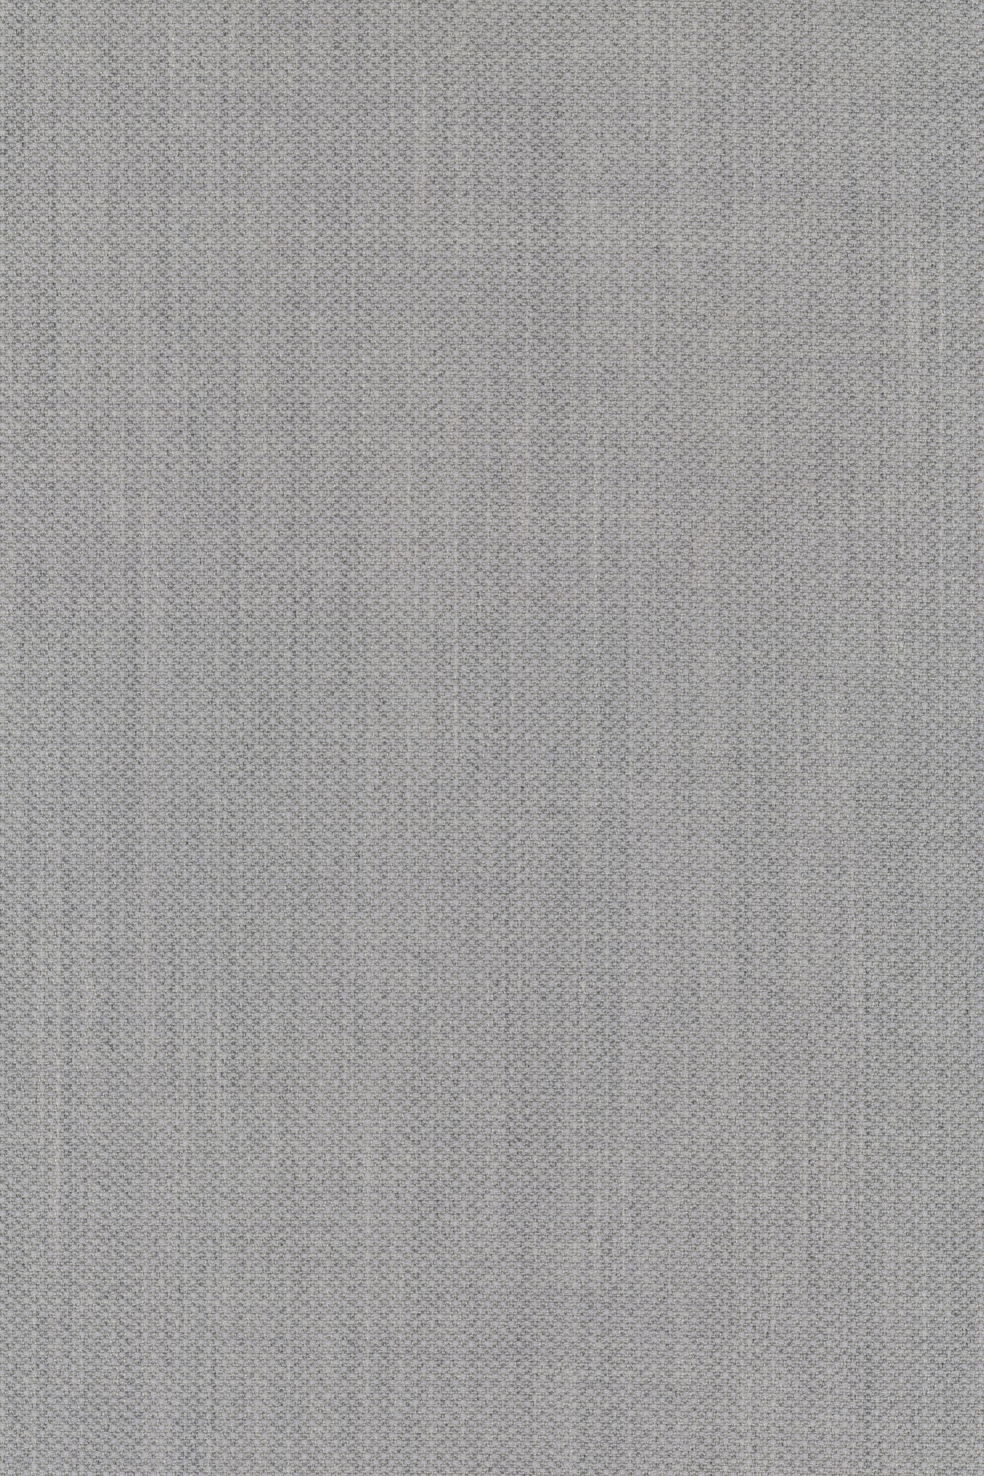 Fabric sample Fiord 121 grey